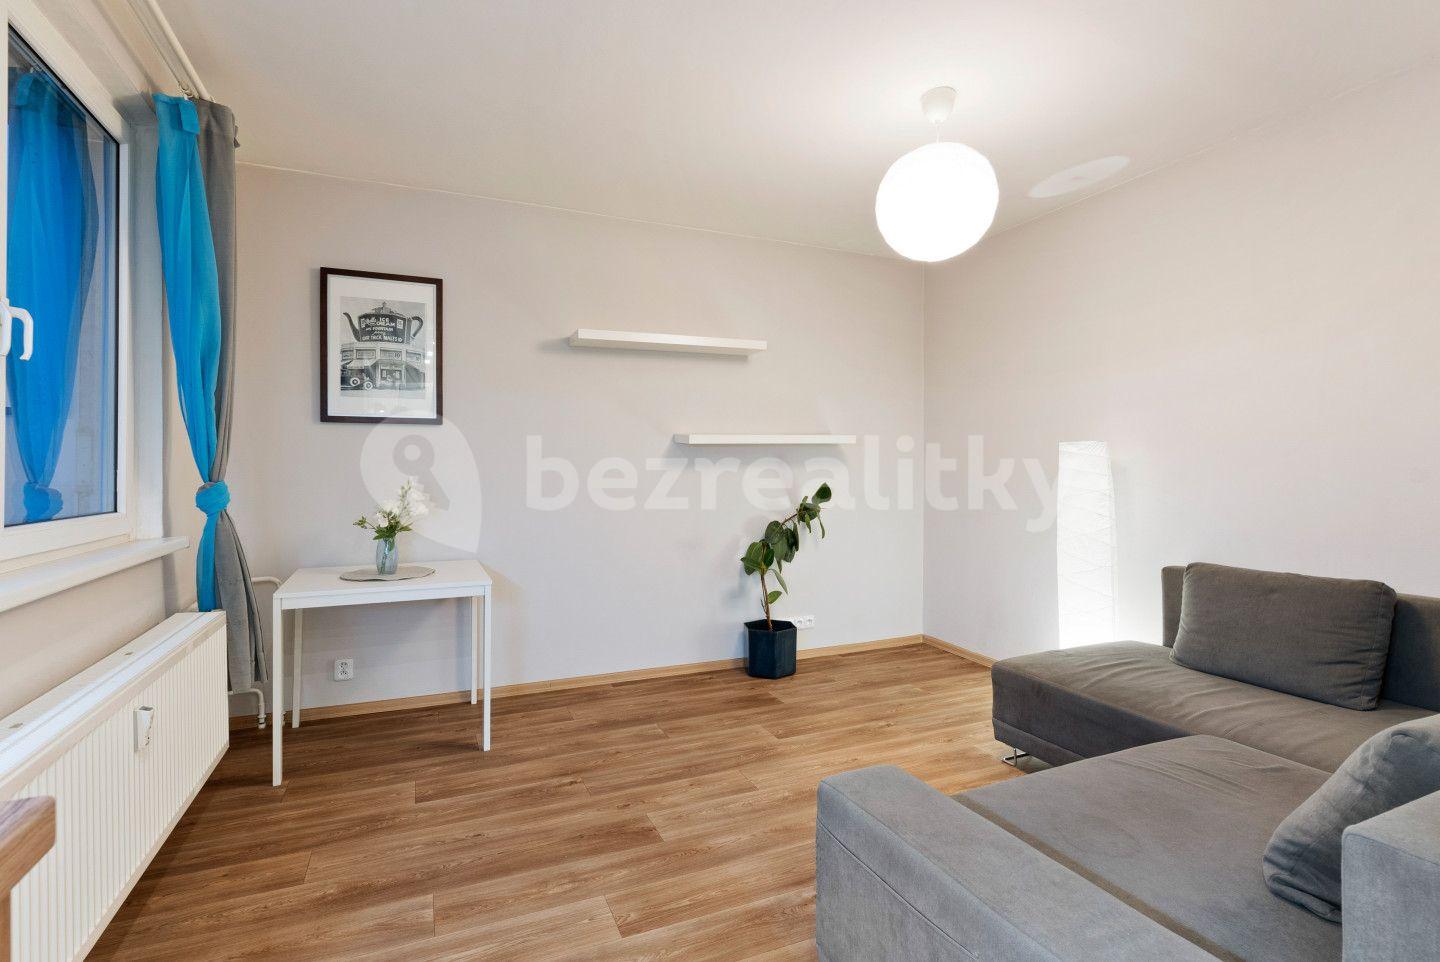 1 bedroom with open-plan kitchen flat for sale, 42 m², Horská, Tanvald, Liberecký Region